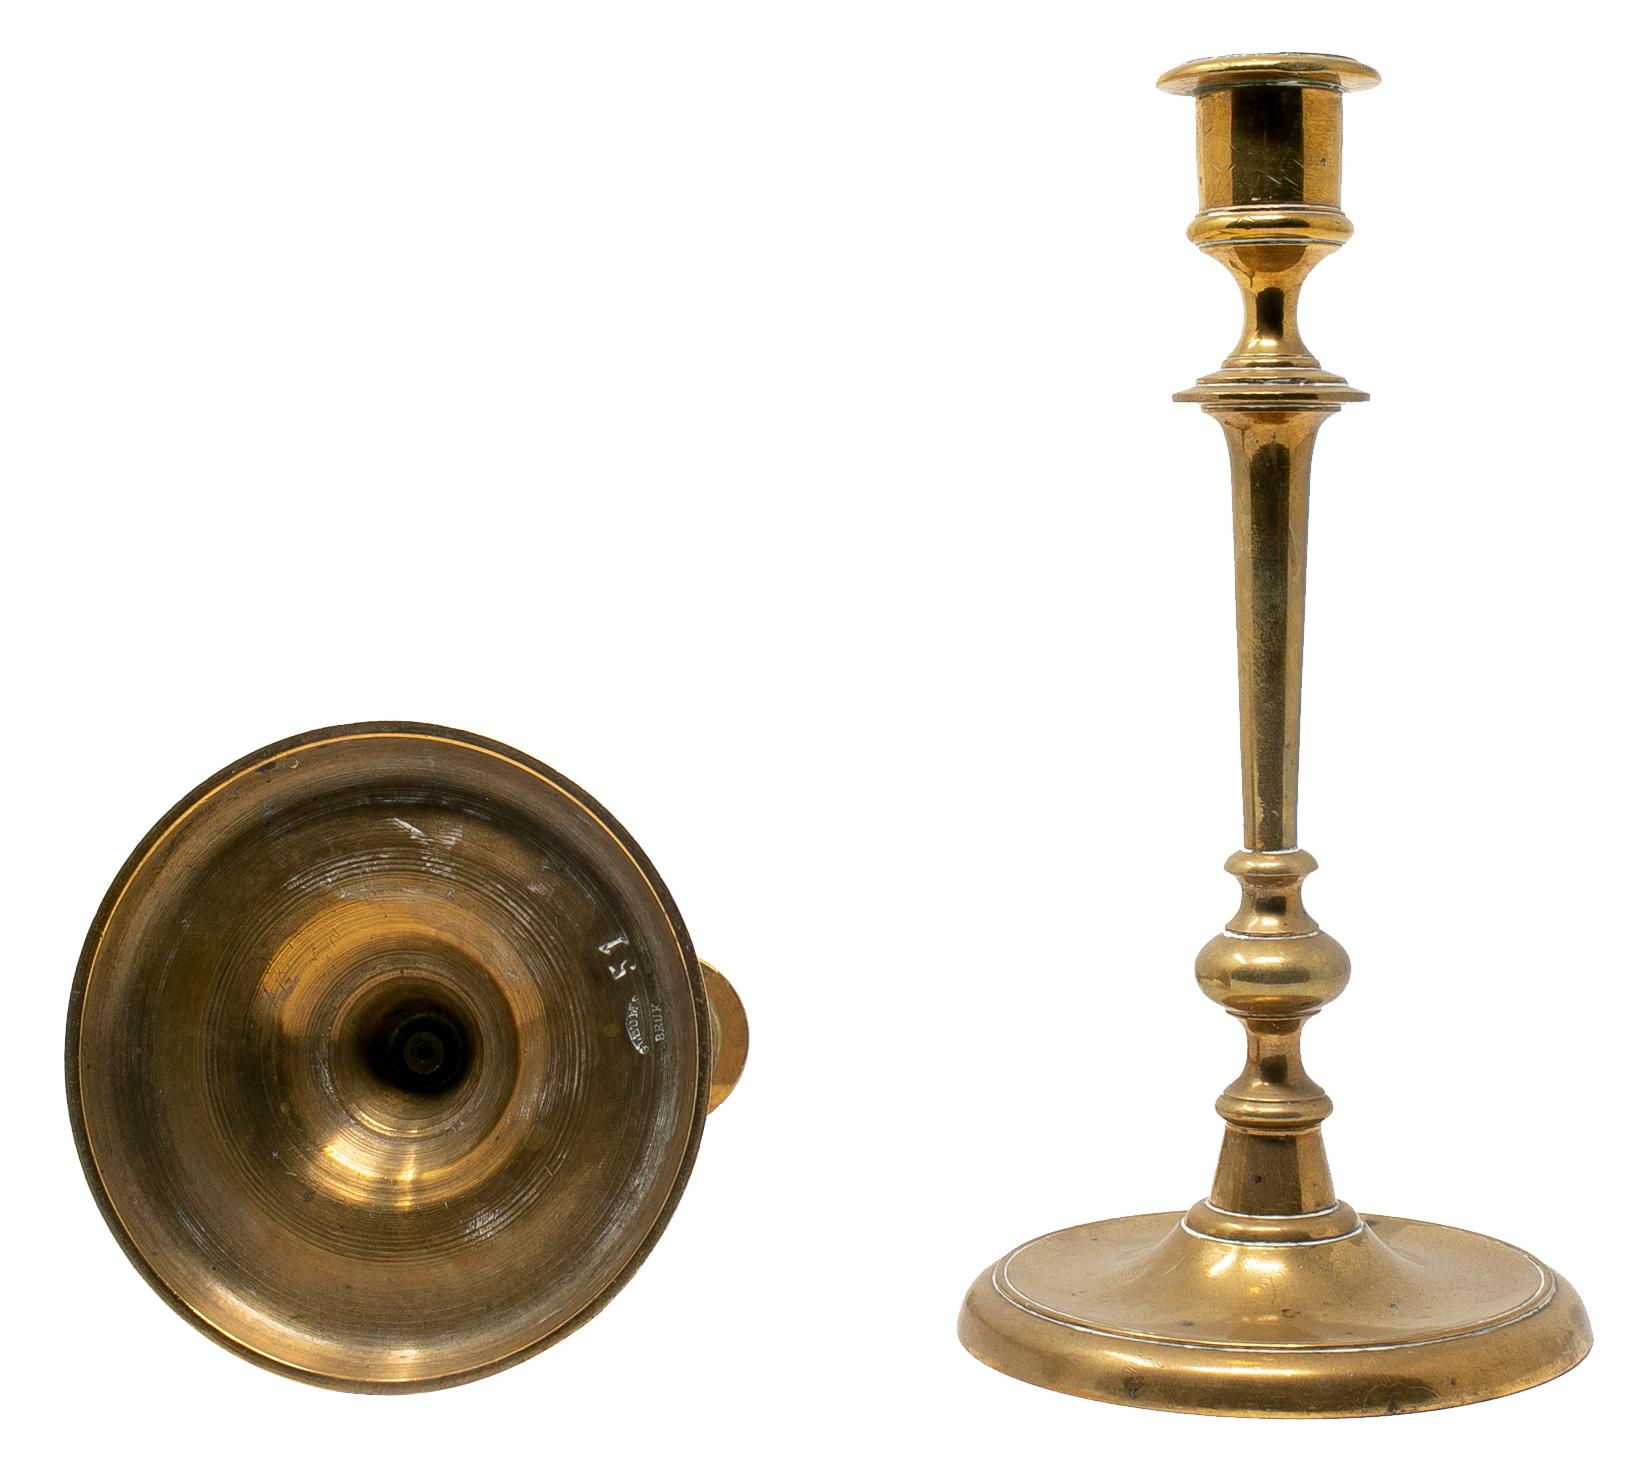 19th century pair of Spanish bronze candlesticks.